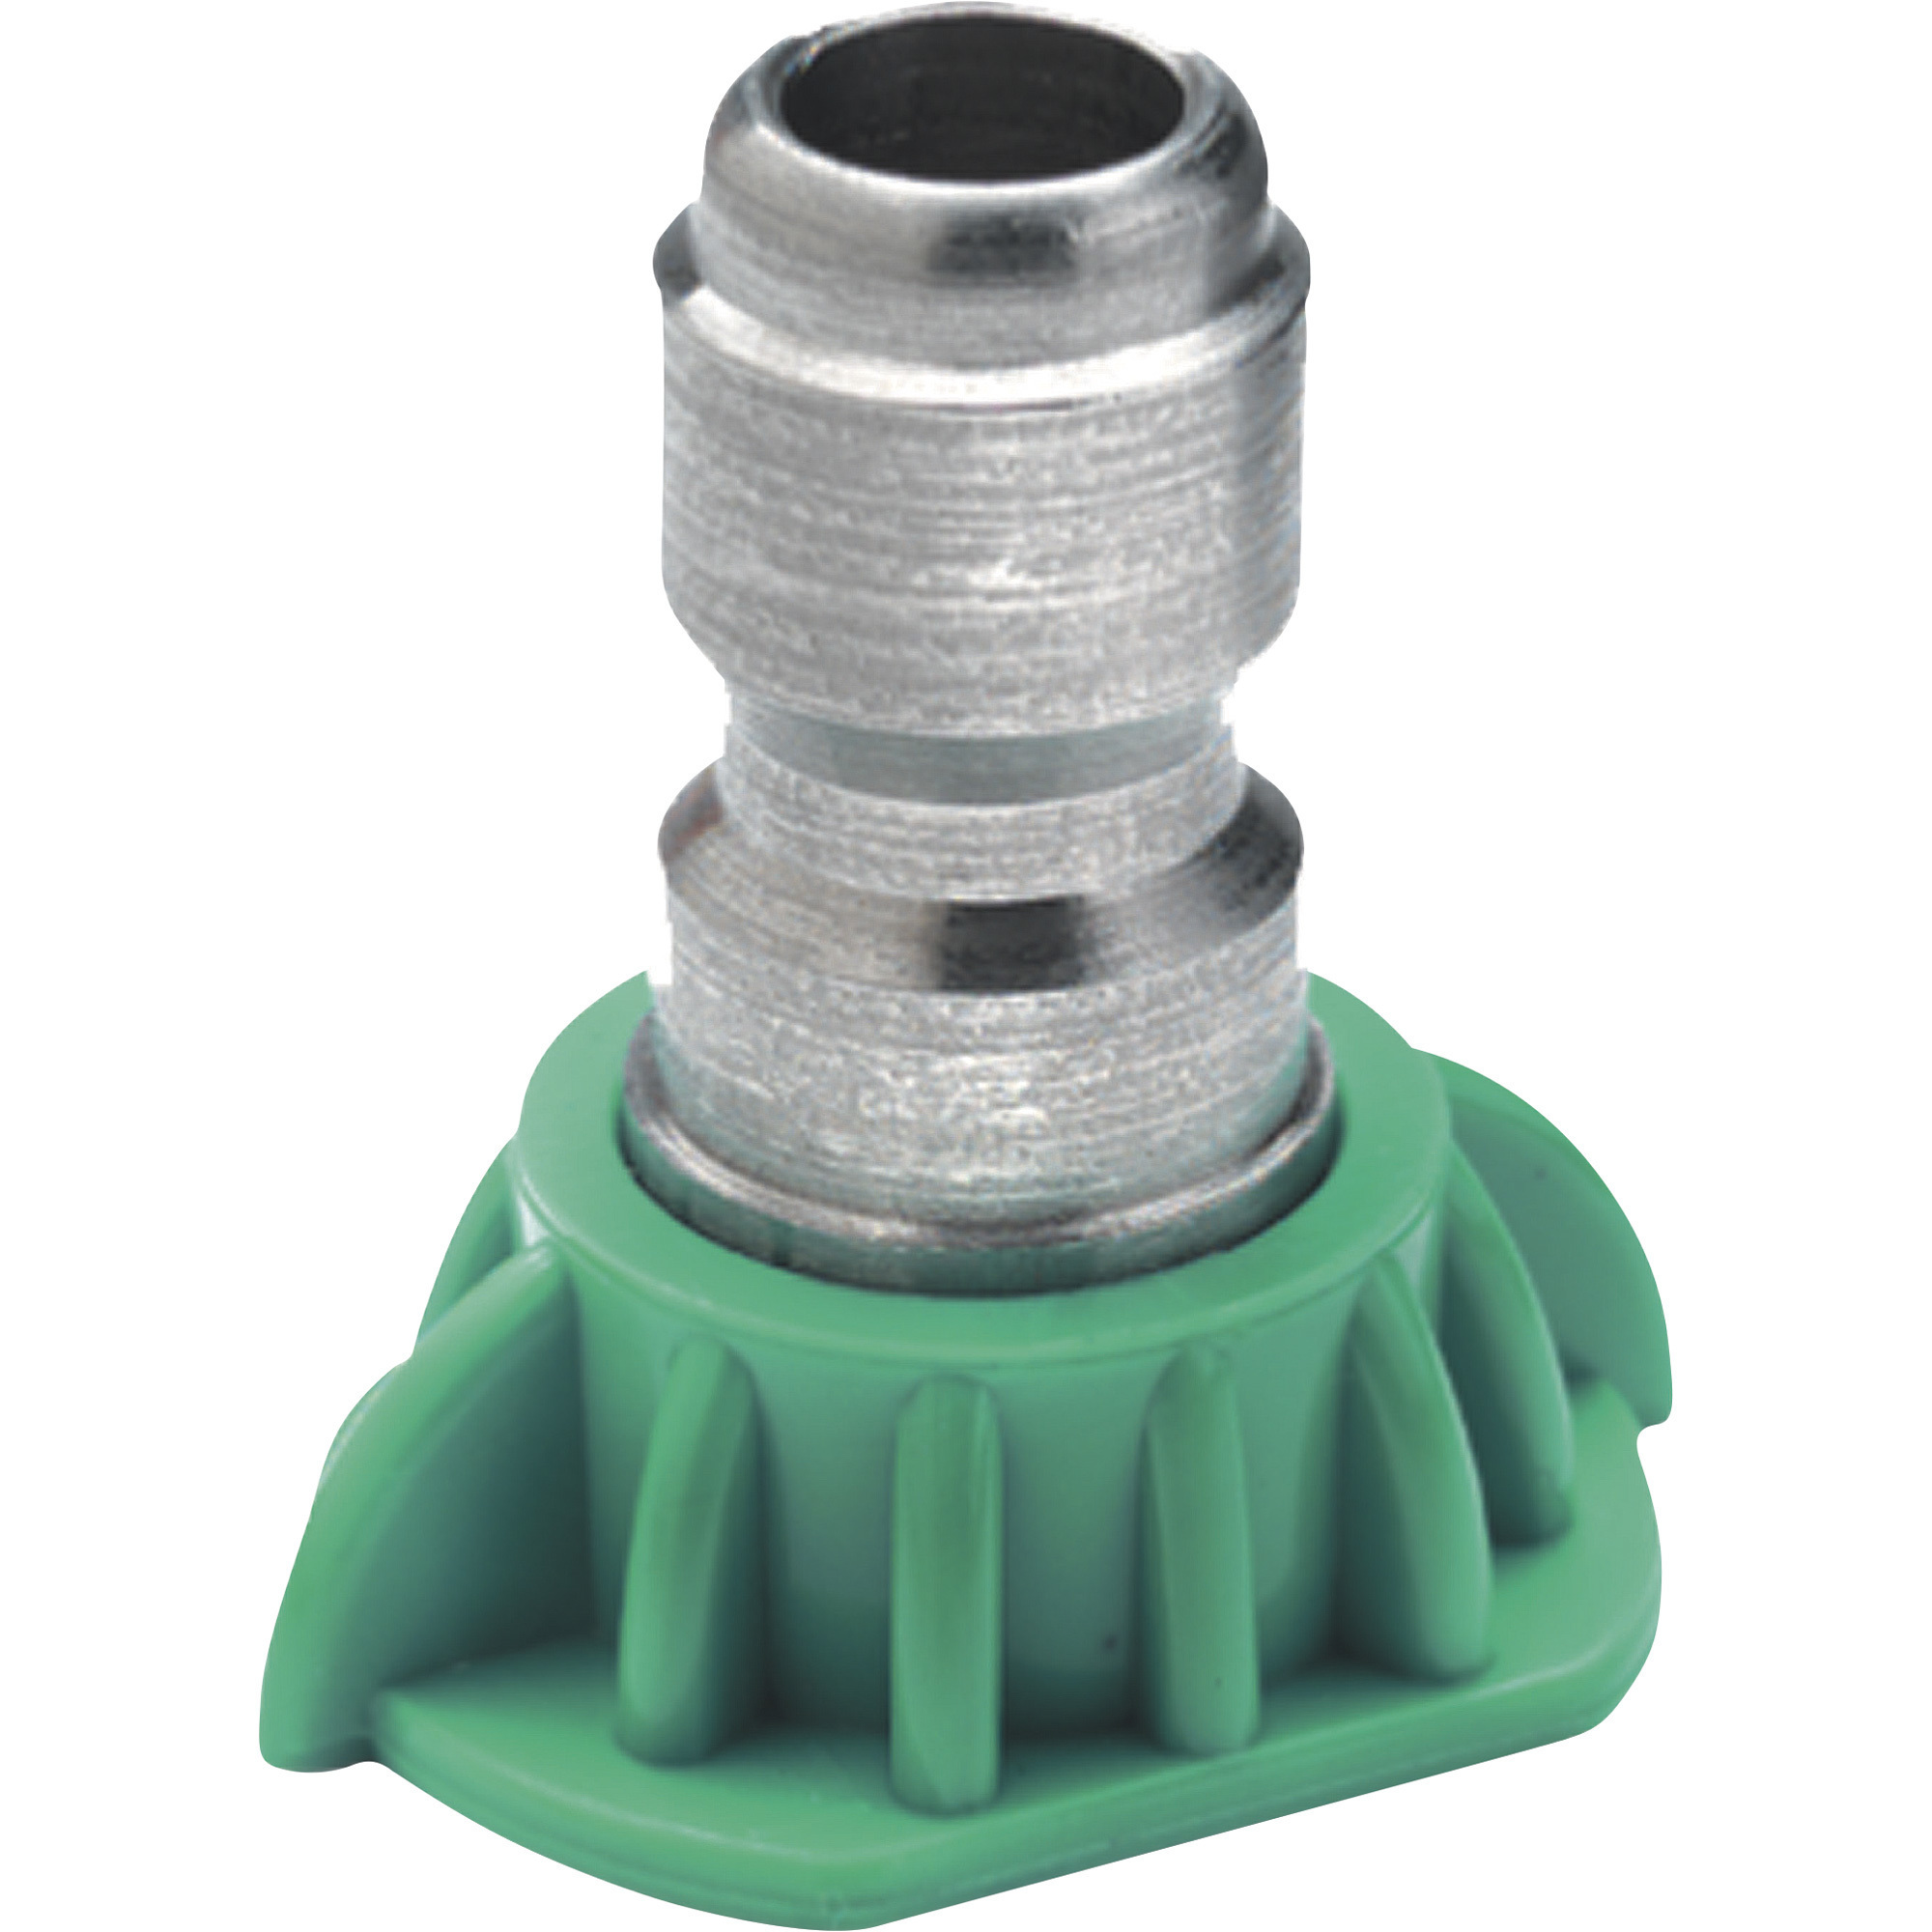 General Pump Pressure Washer Quick Couple Spray Nozzle â 7.5 Size, 25 Degree Spray, Model N25075QP